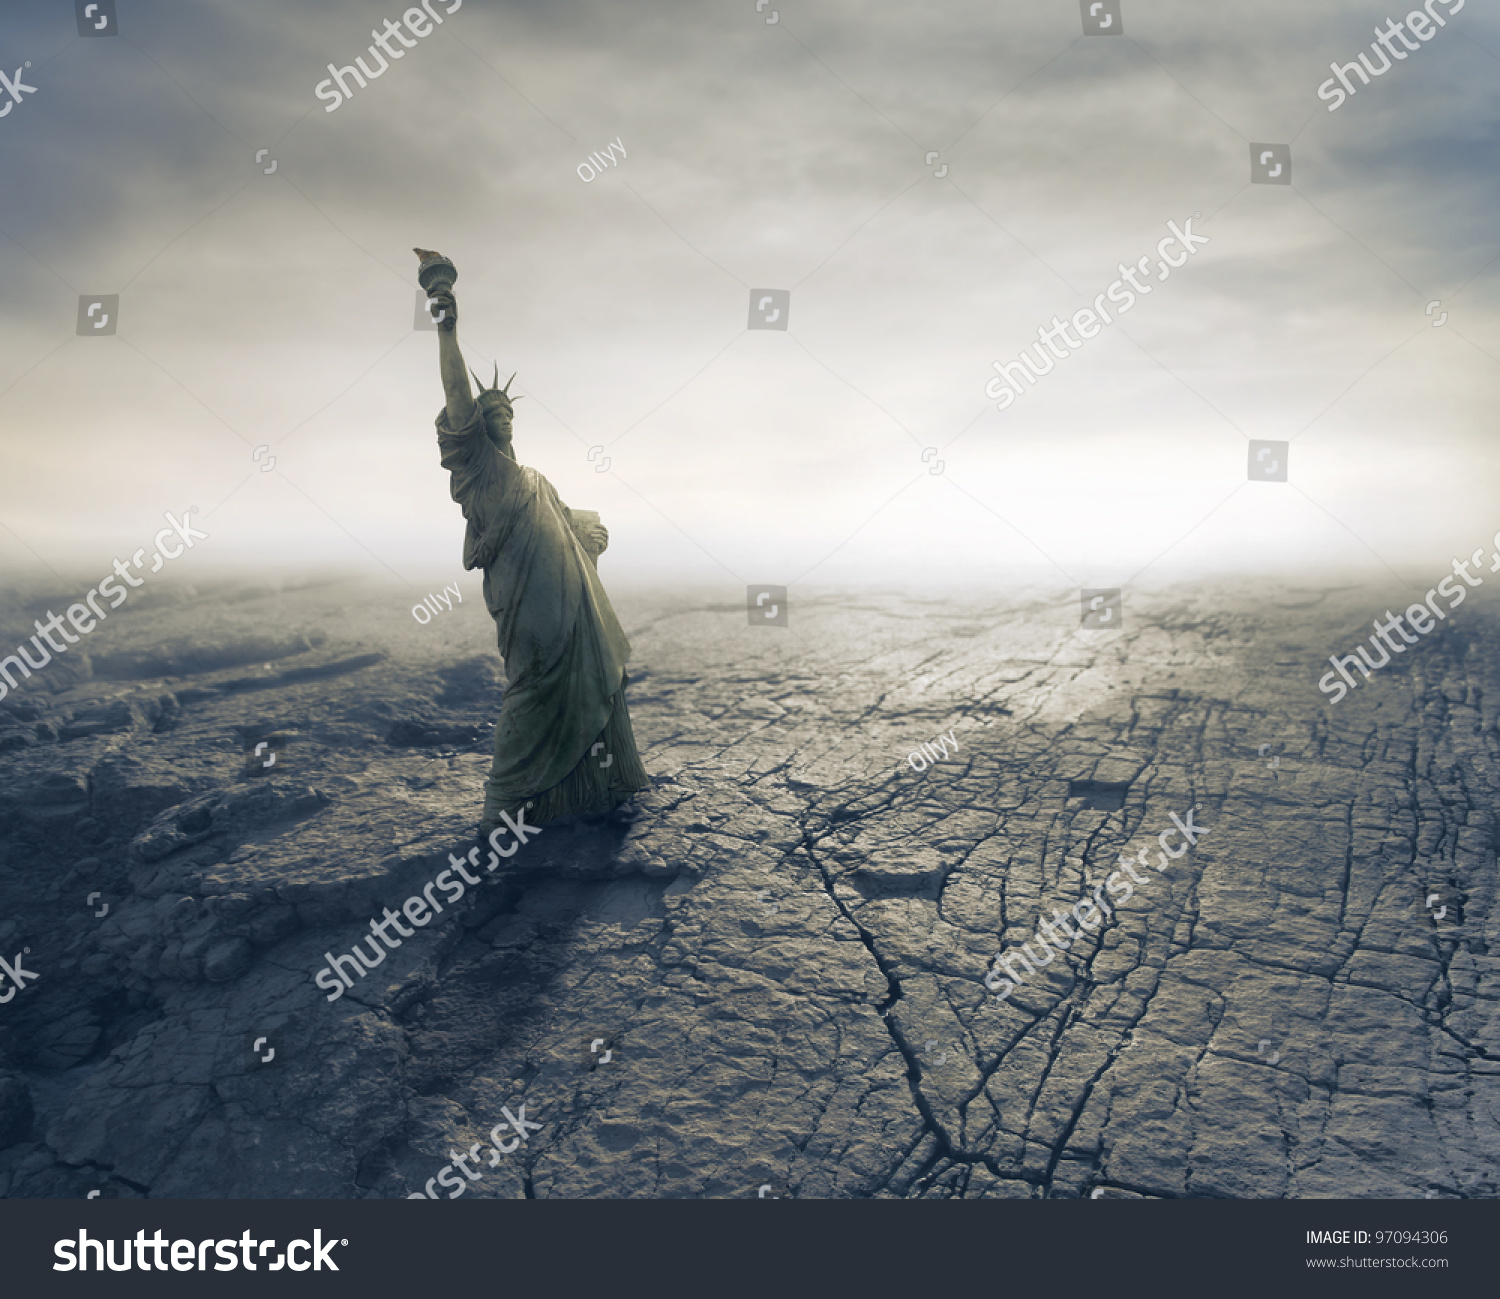 Statue of Liberty on apocalyptic background #97094306